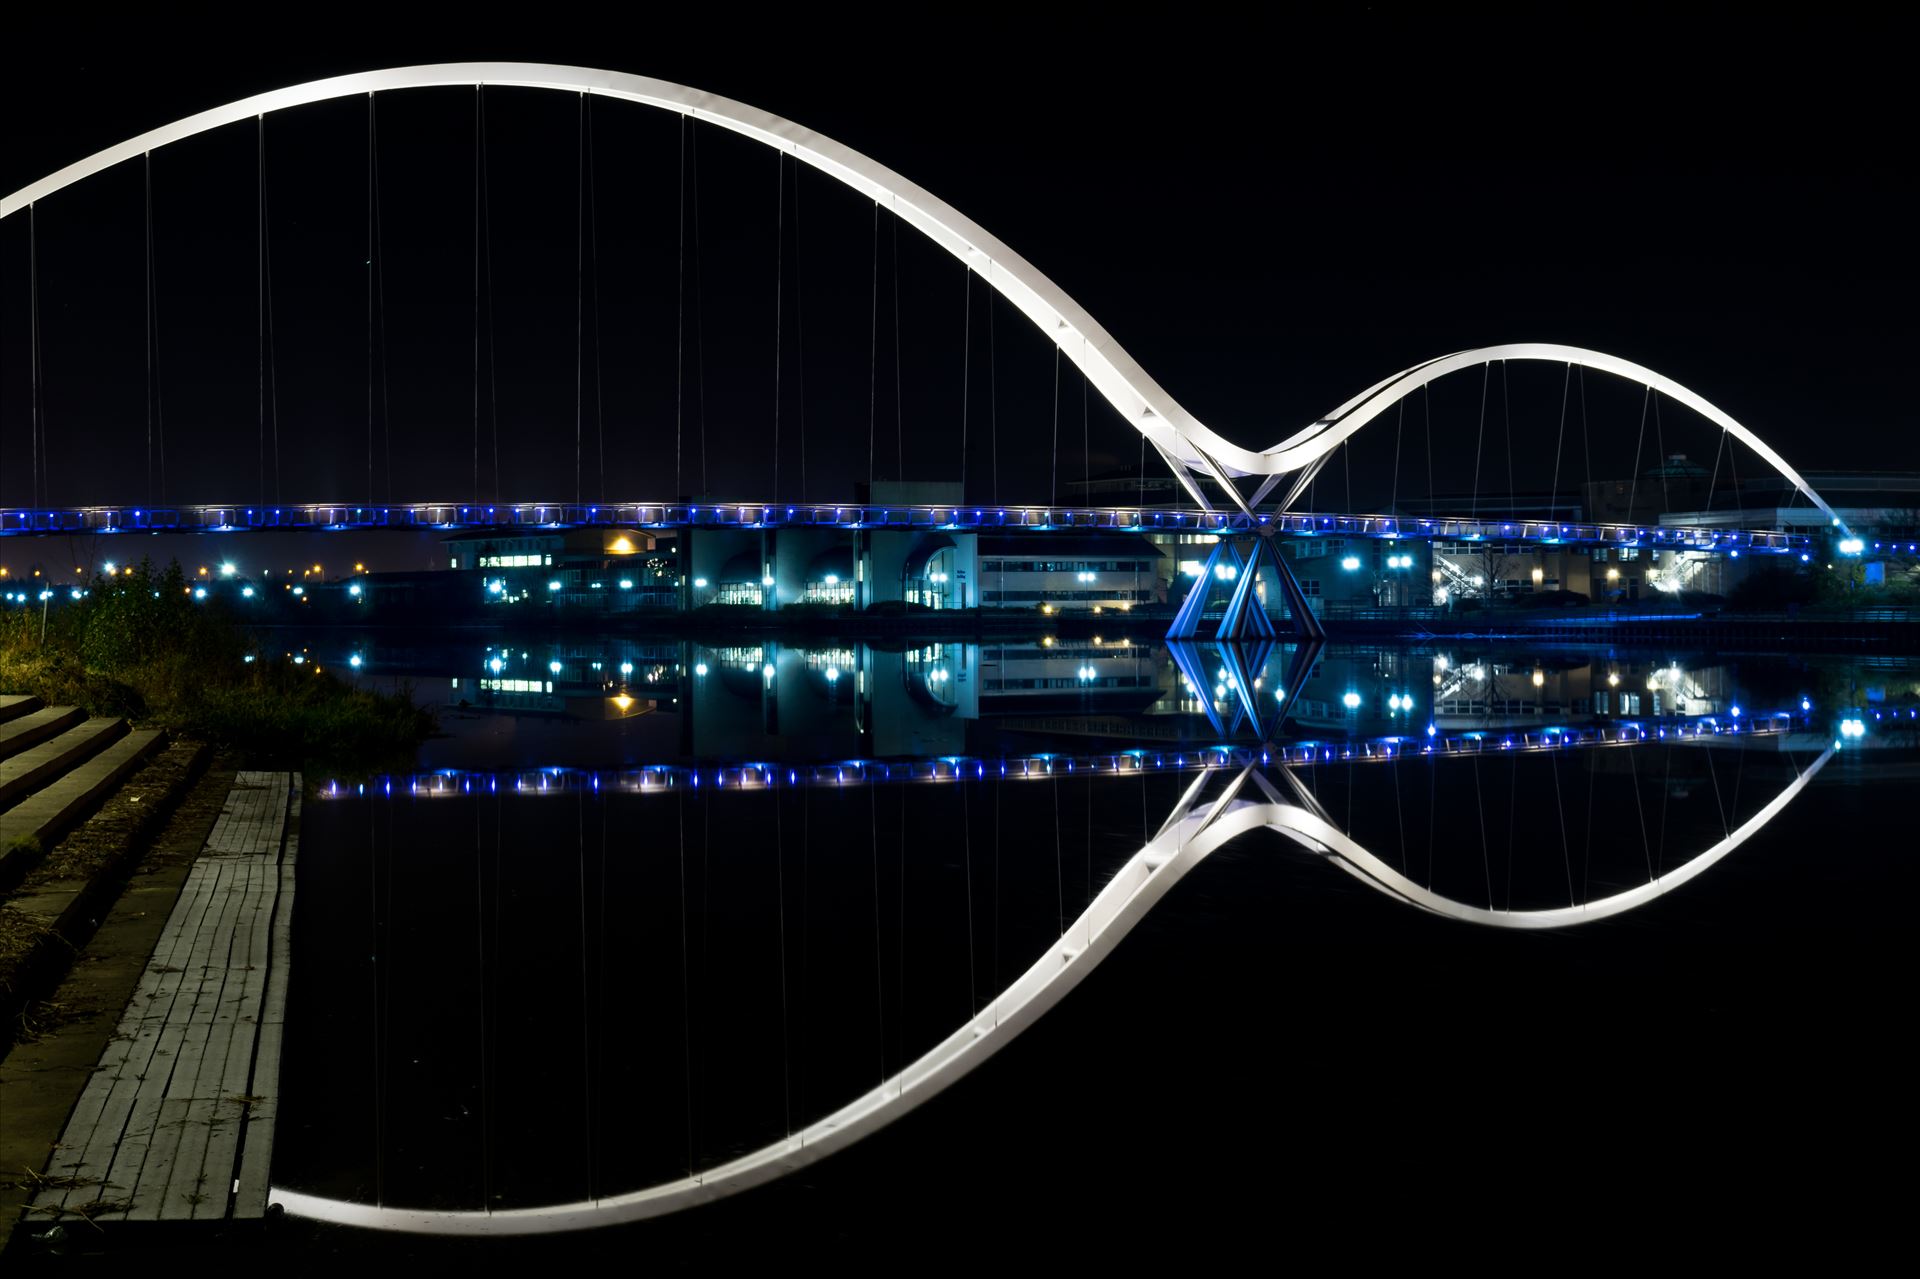 Infinity Bridge Stockton on Tess at night - Infinity Bridge Stockton on Tees at night by AJ Stoves Photography